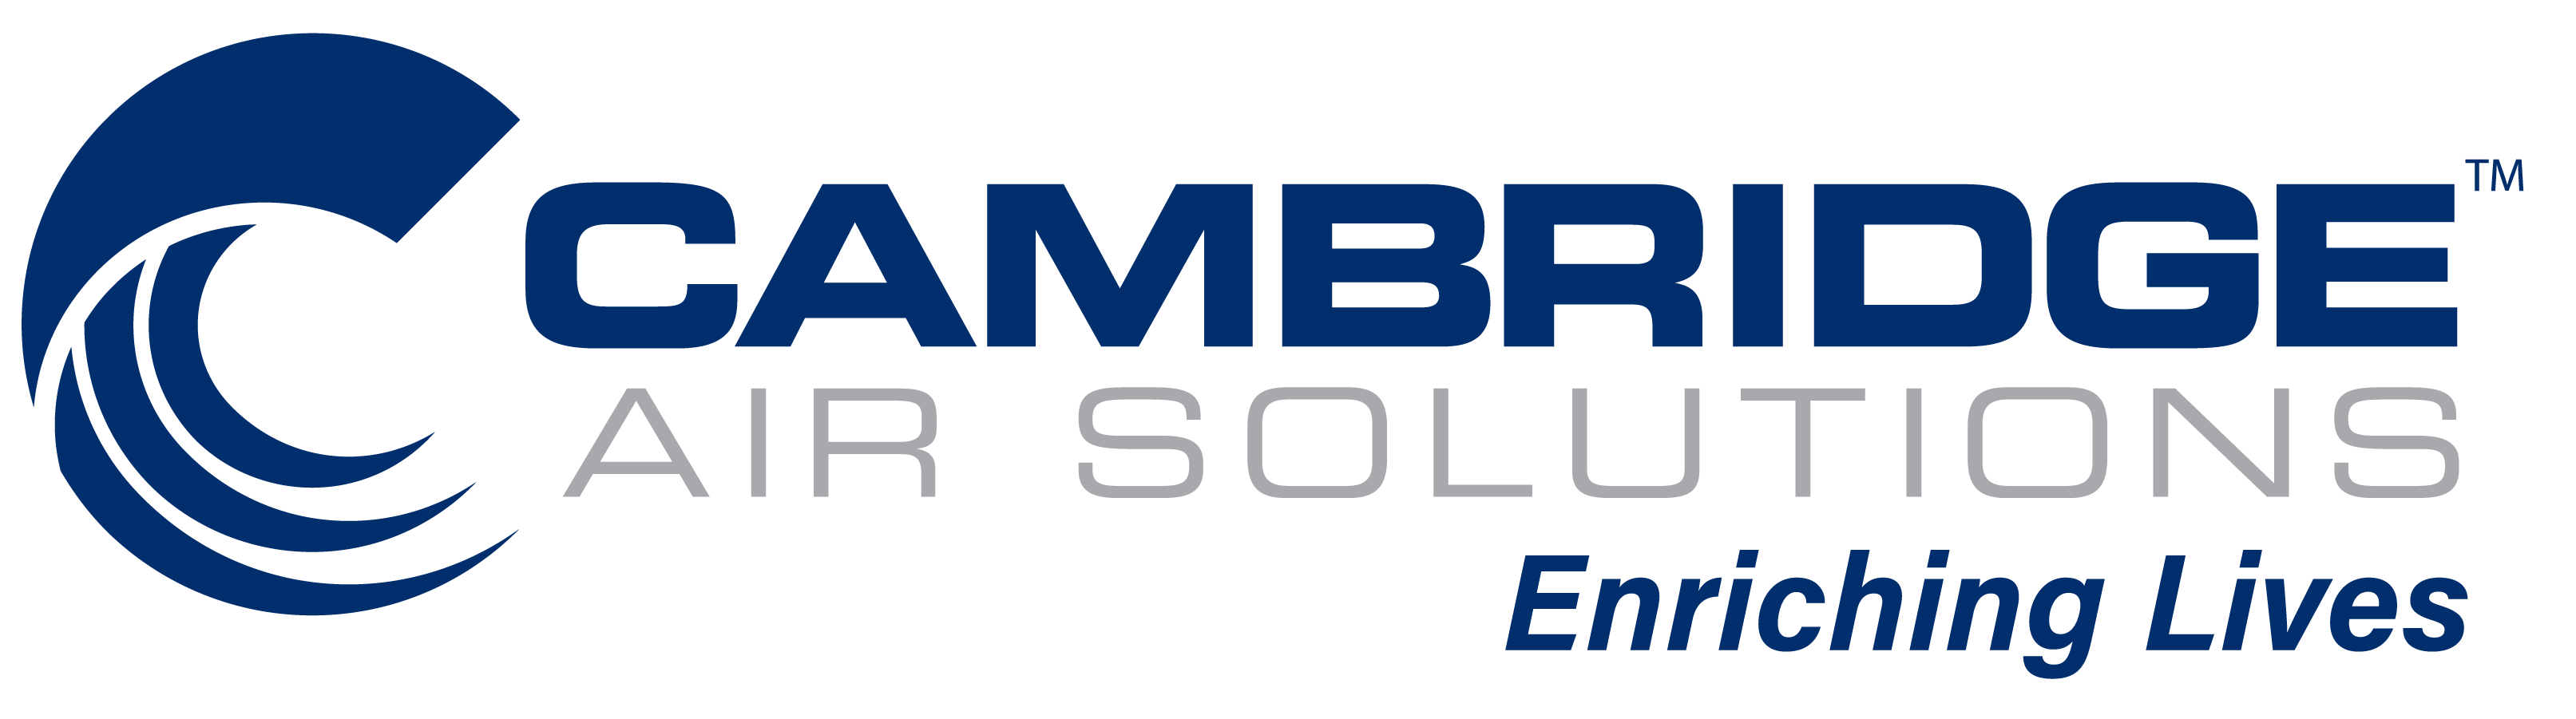 Cambridge Air Solutions logo